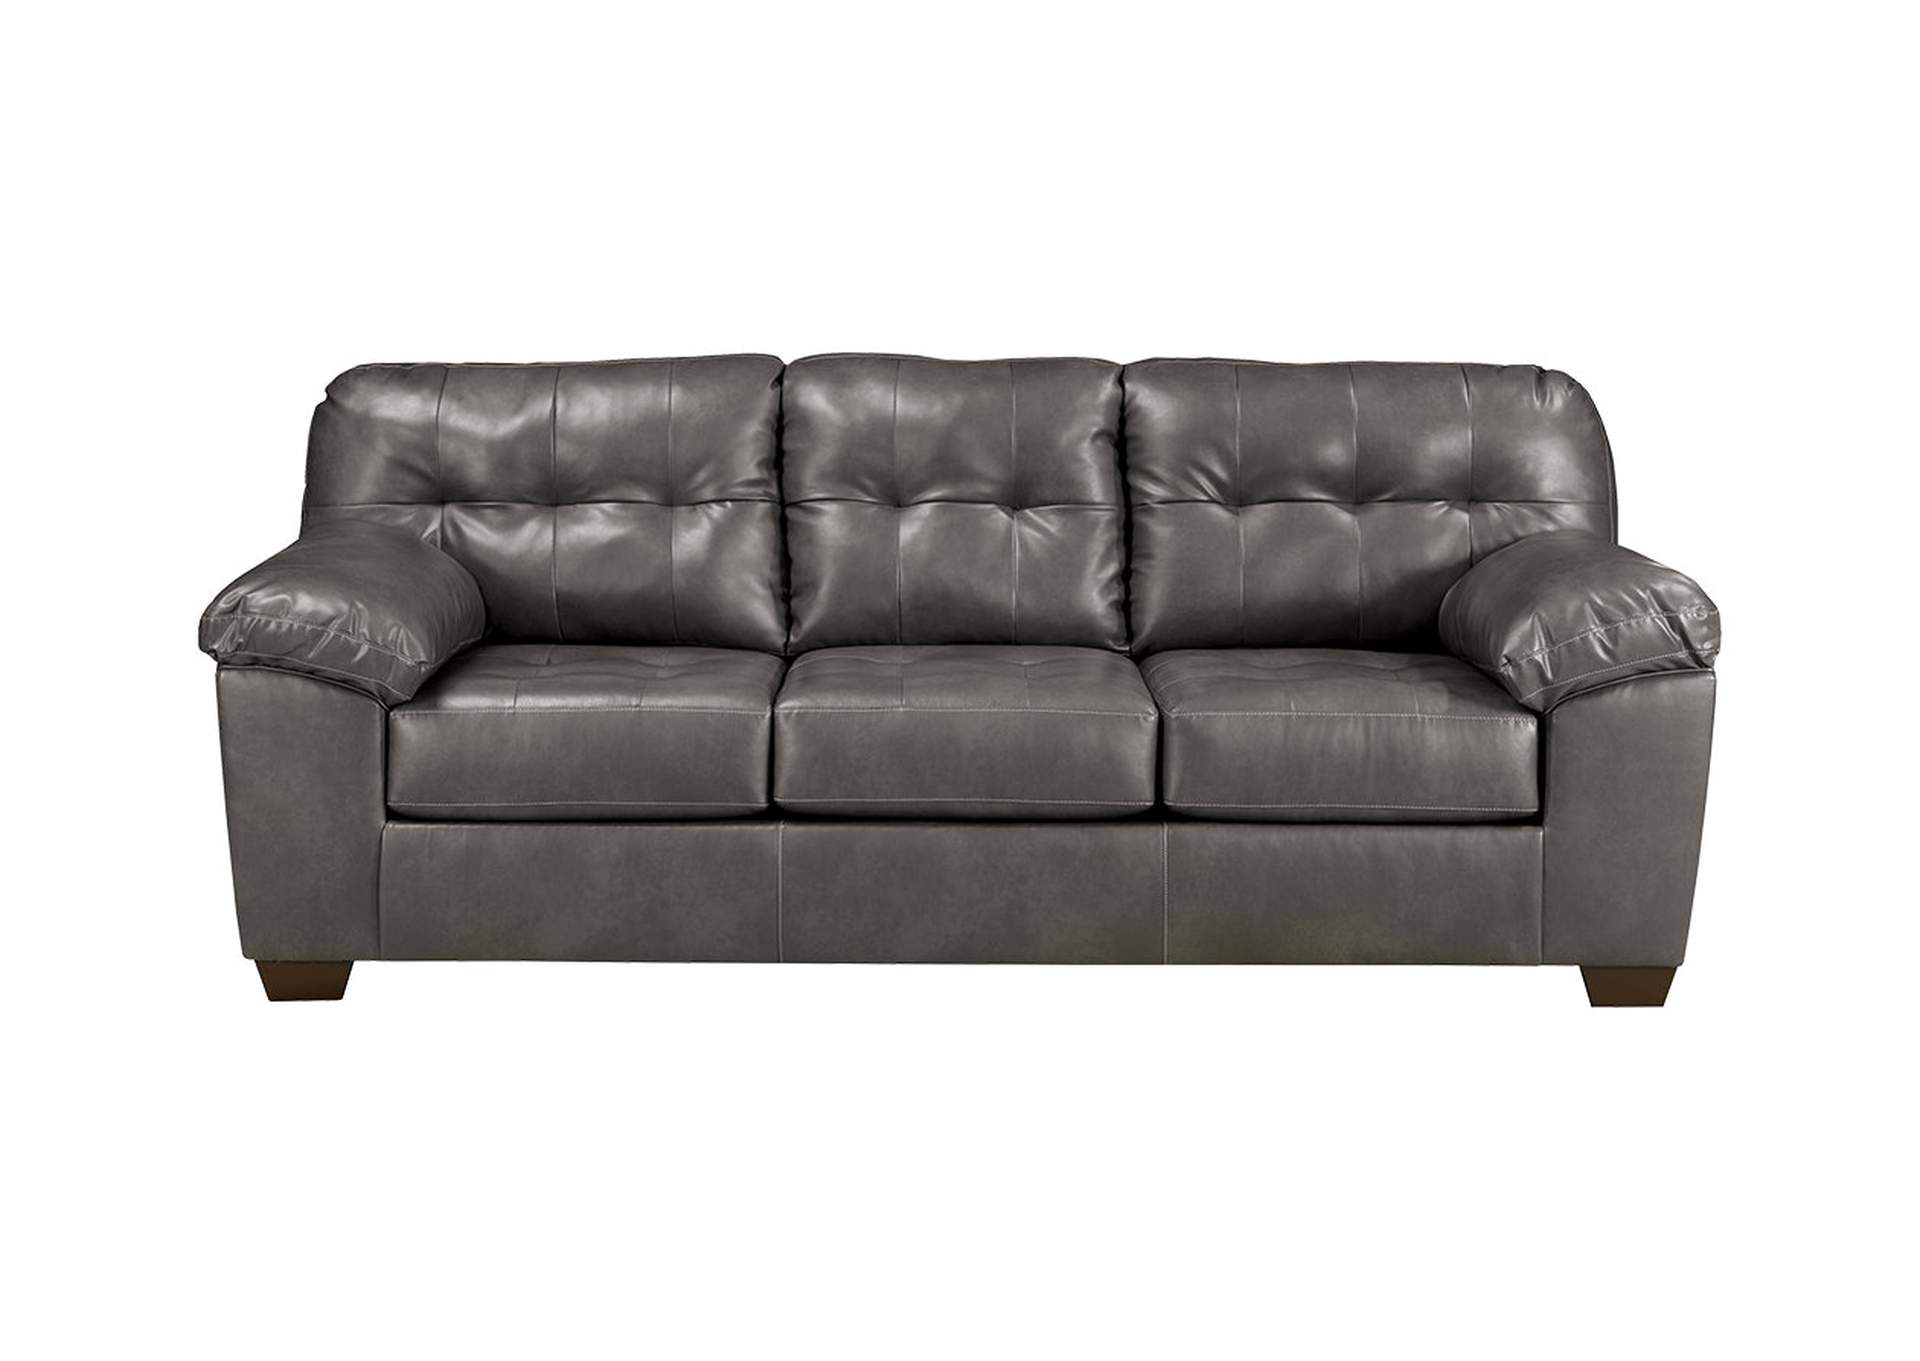 Furniture Outlet Bend Or Alliston Durablend Gray Queen Sofa Sleeper